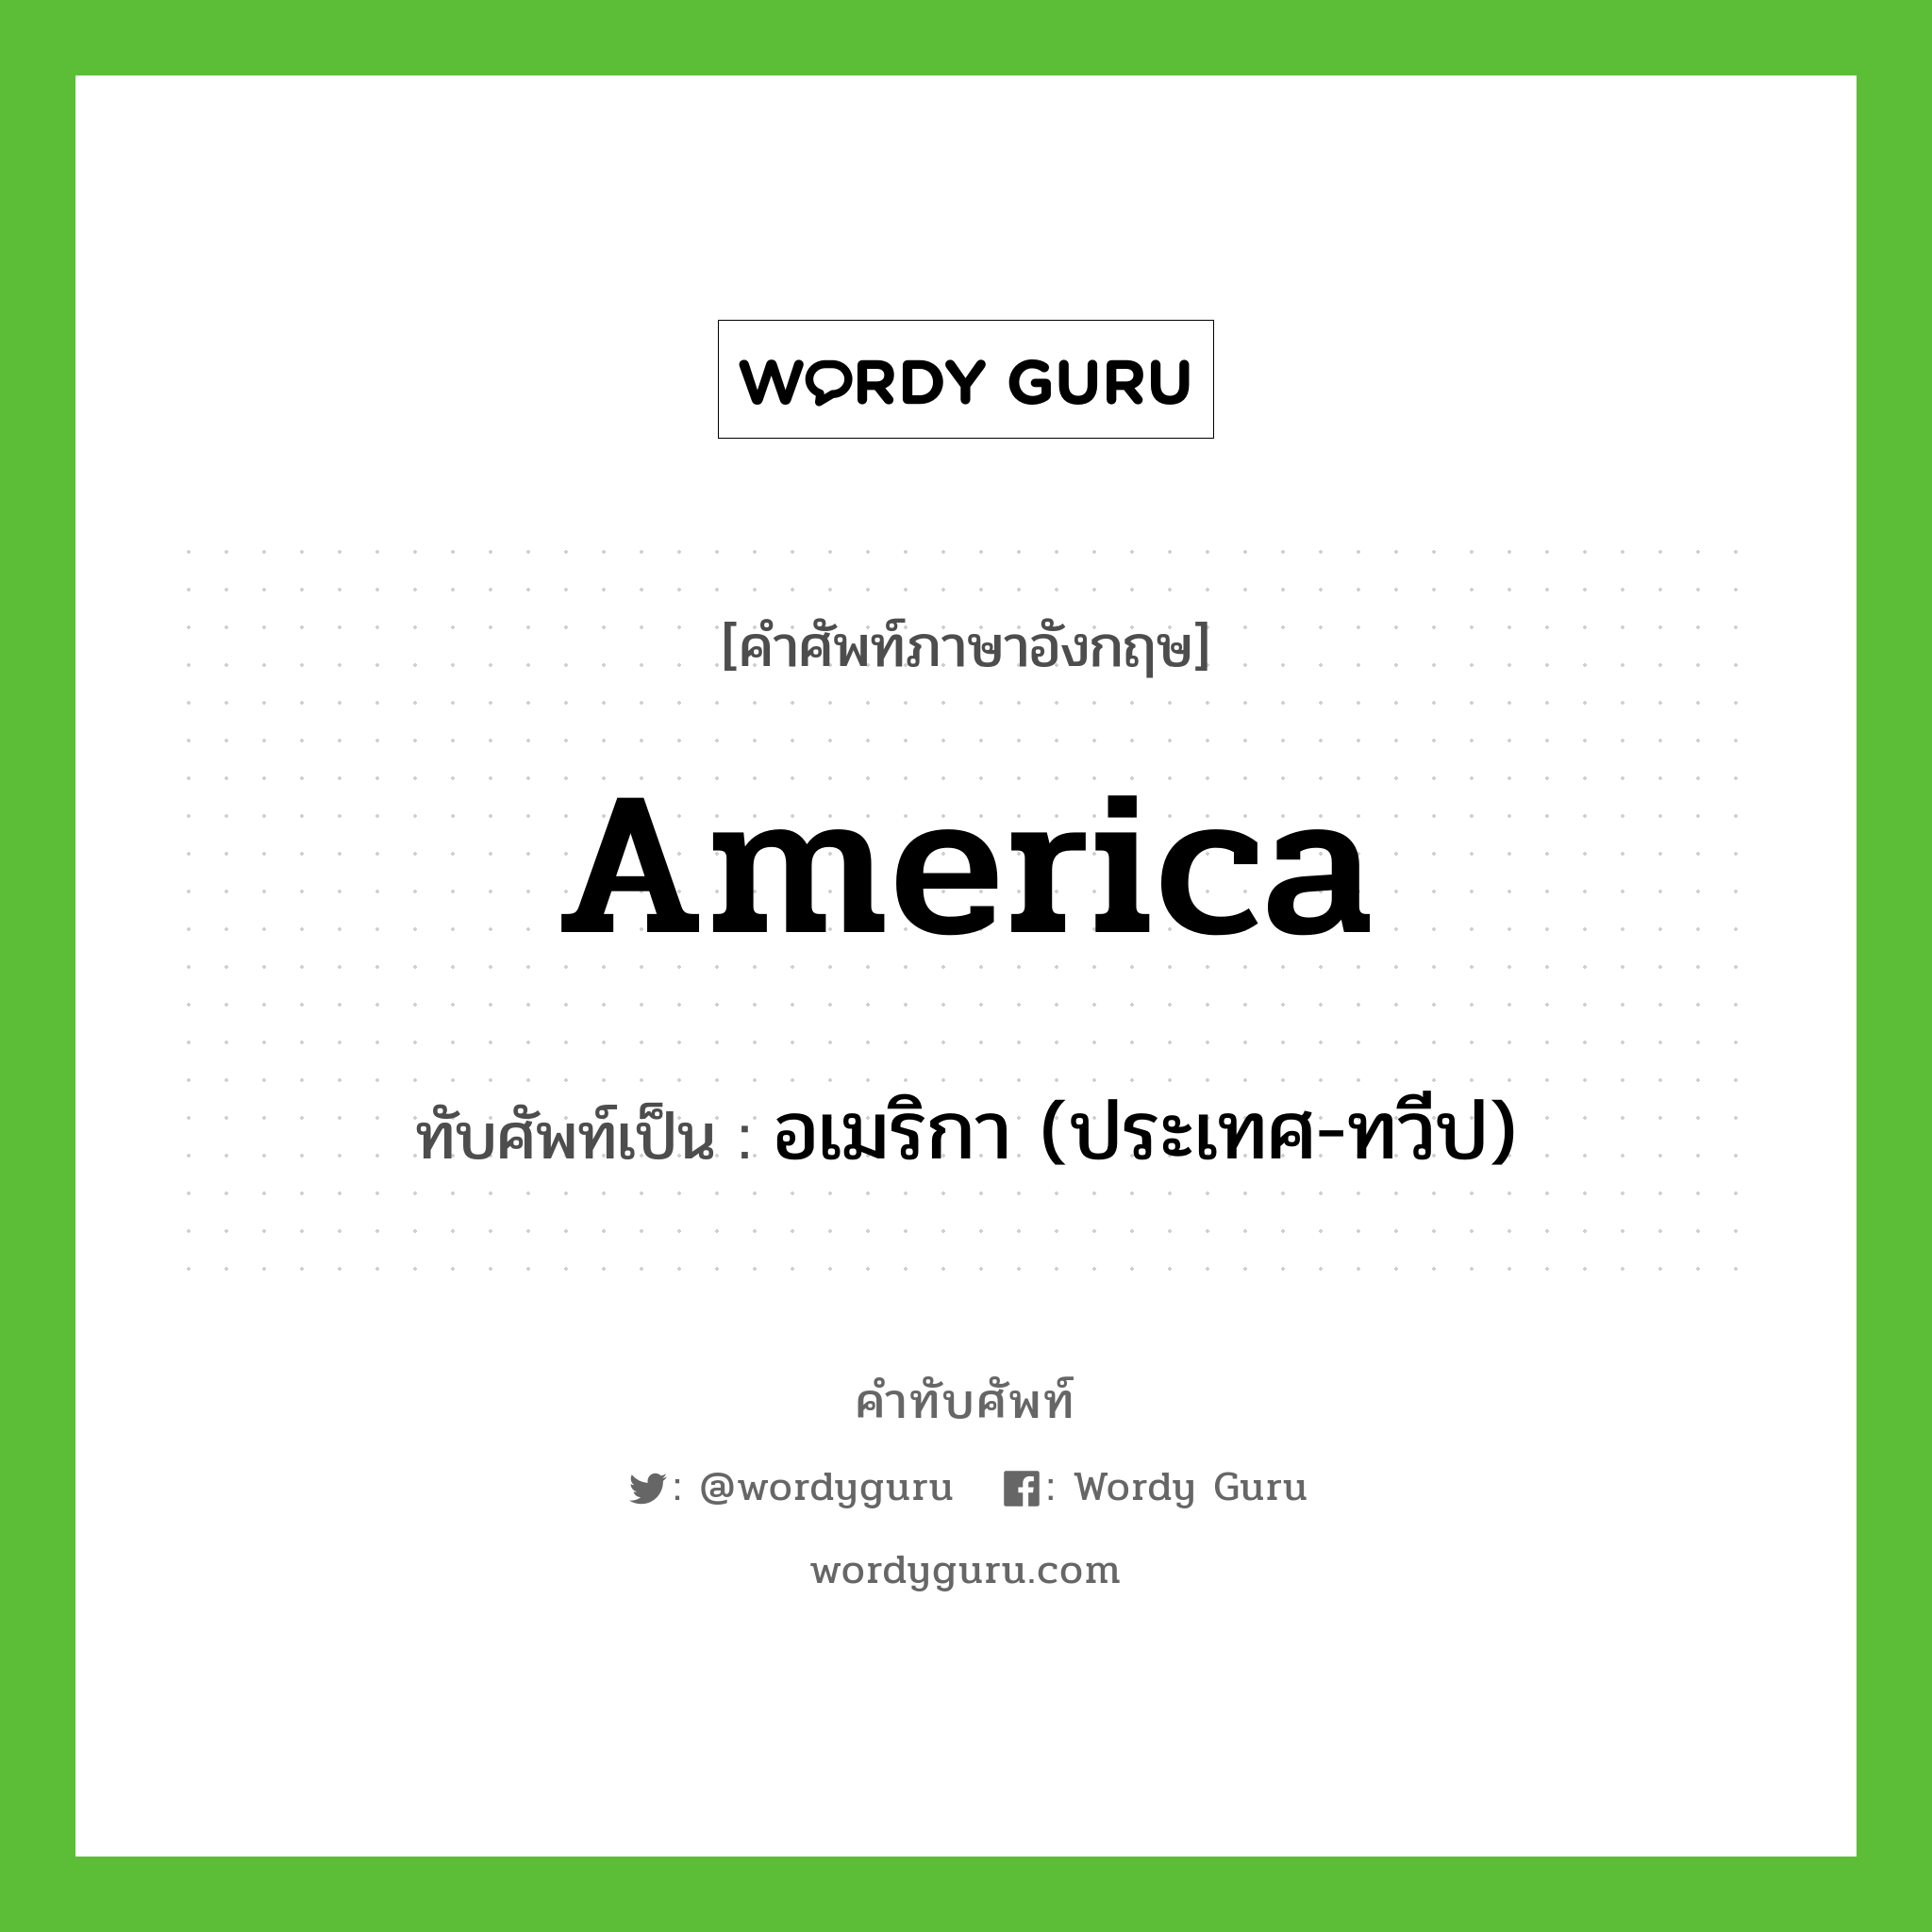 America เขียนเป็นคำไทยว่าอะไร?, คำศัพท์ภาษาอังกฤษ America ทับศัพท์เป็น อเมริกา (ประเทศ-ทวีป)